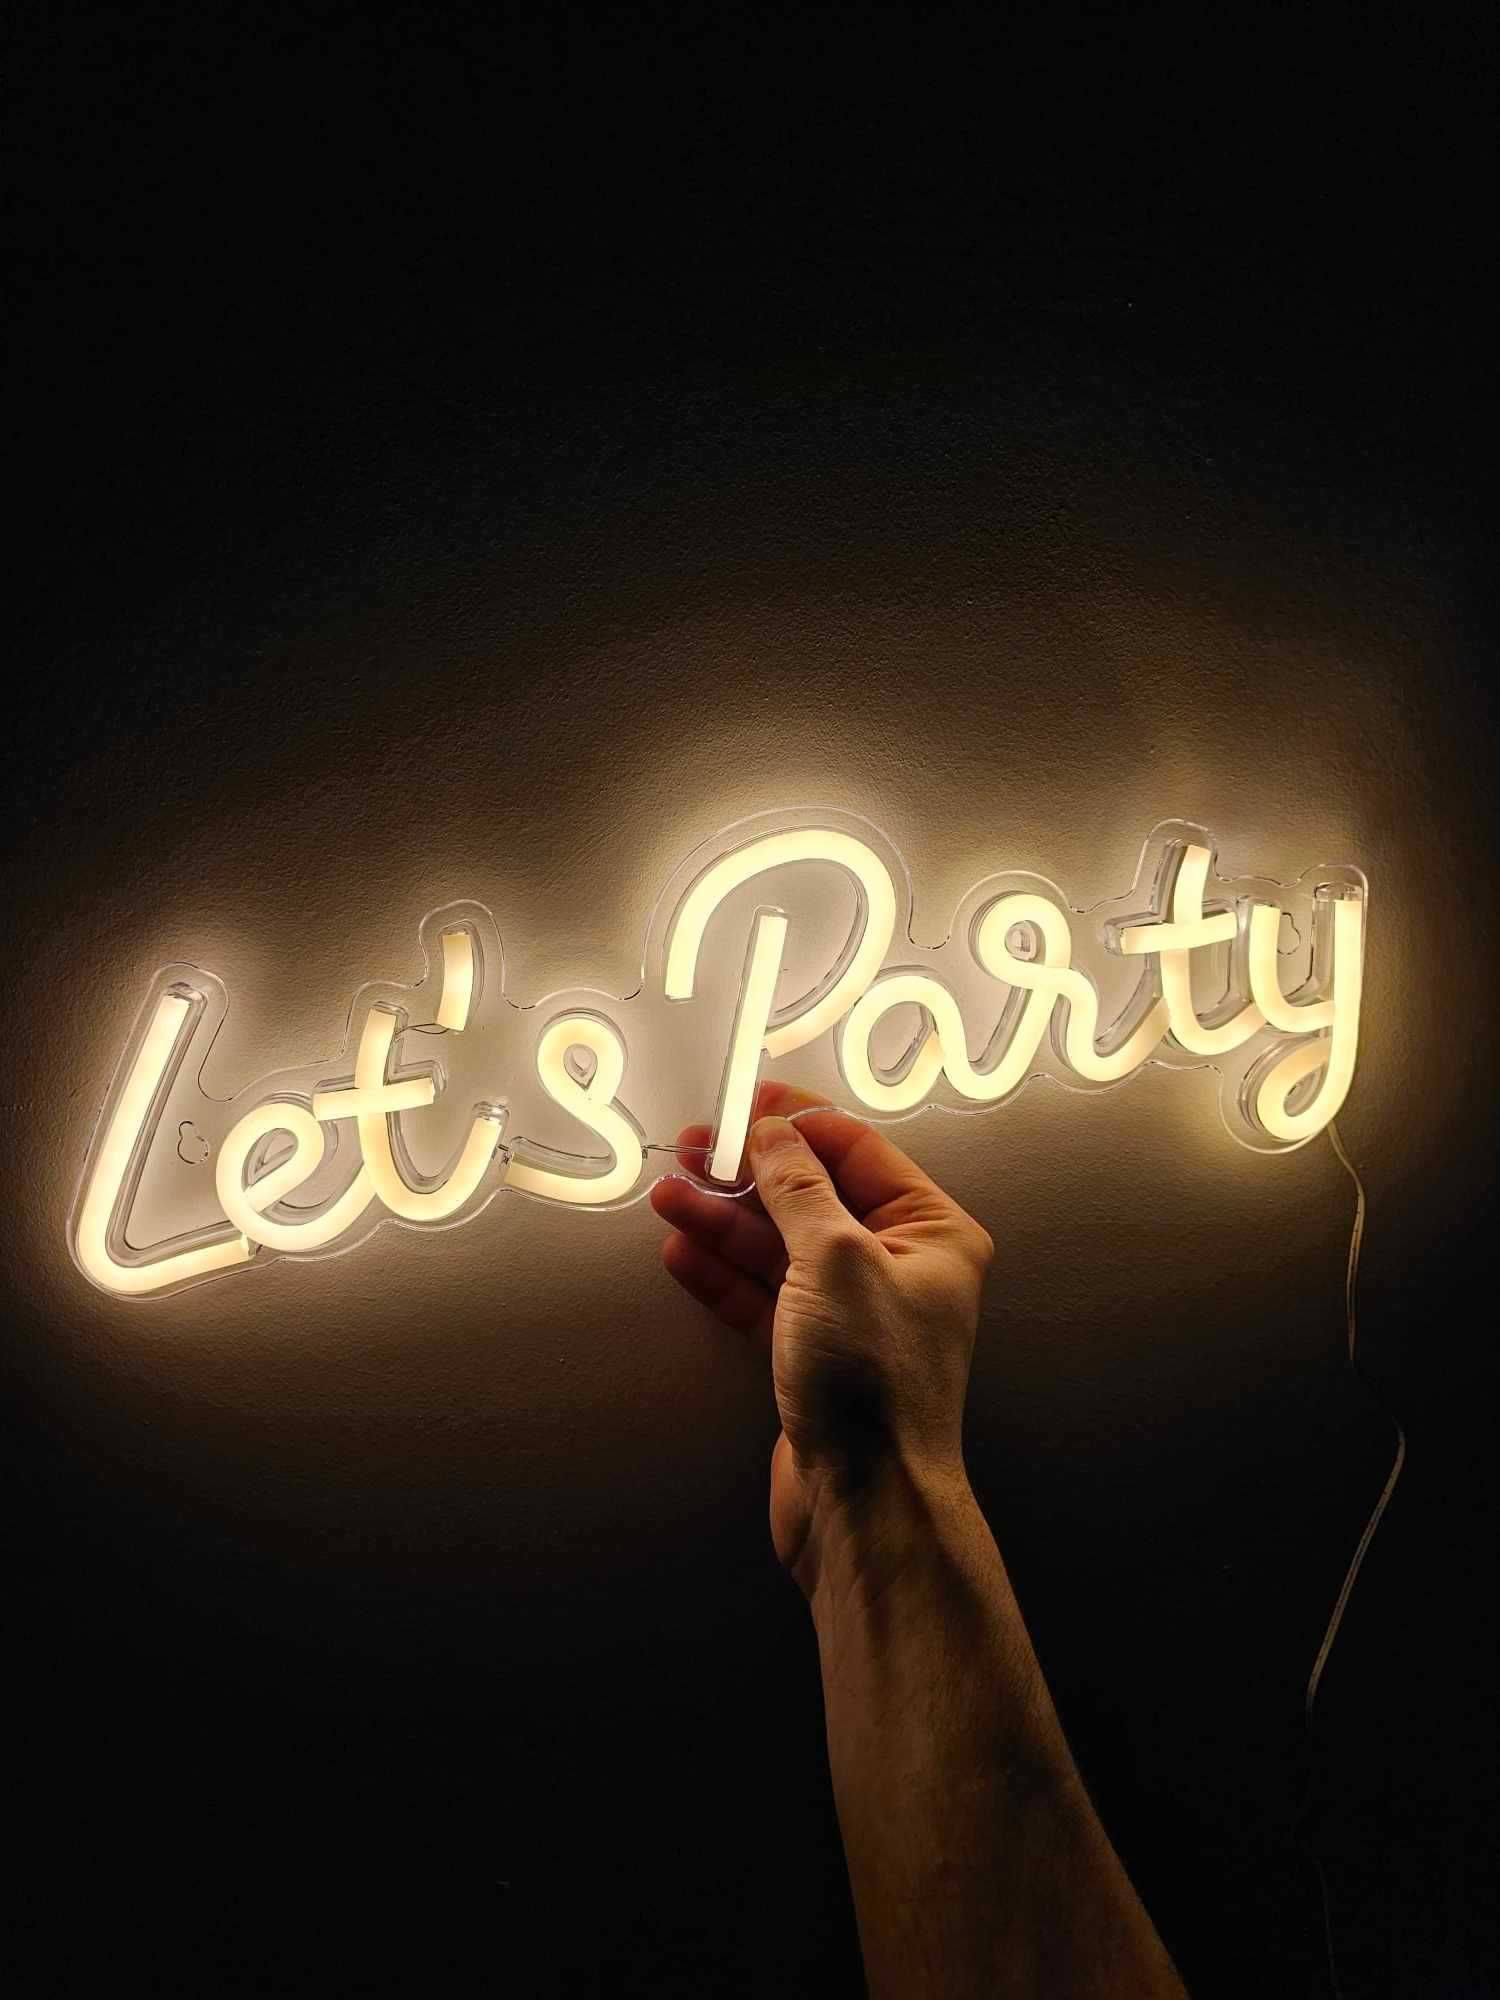 Napis Neon Let's Party Urodziny Ledon LOVE Fotolustro miny dymne